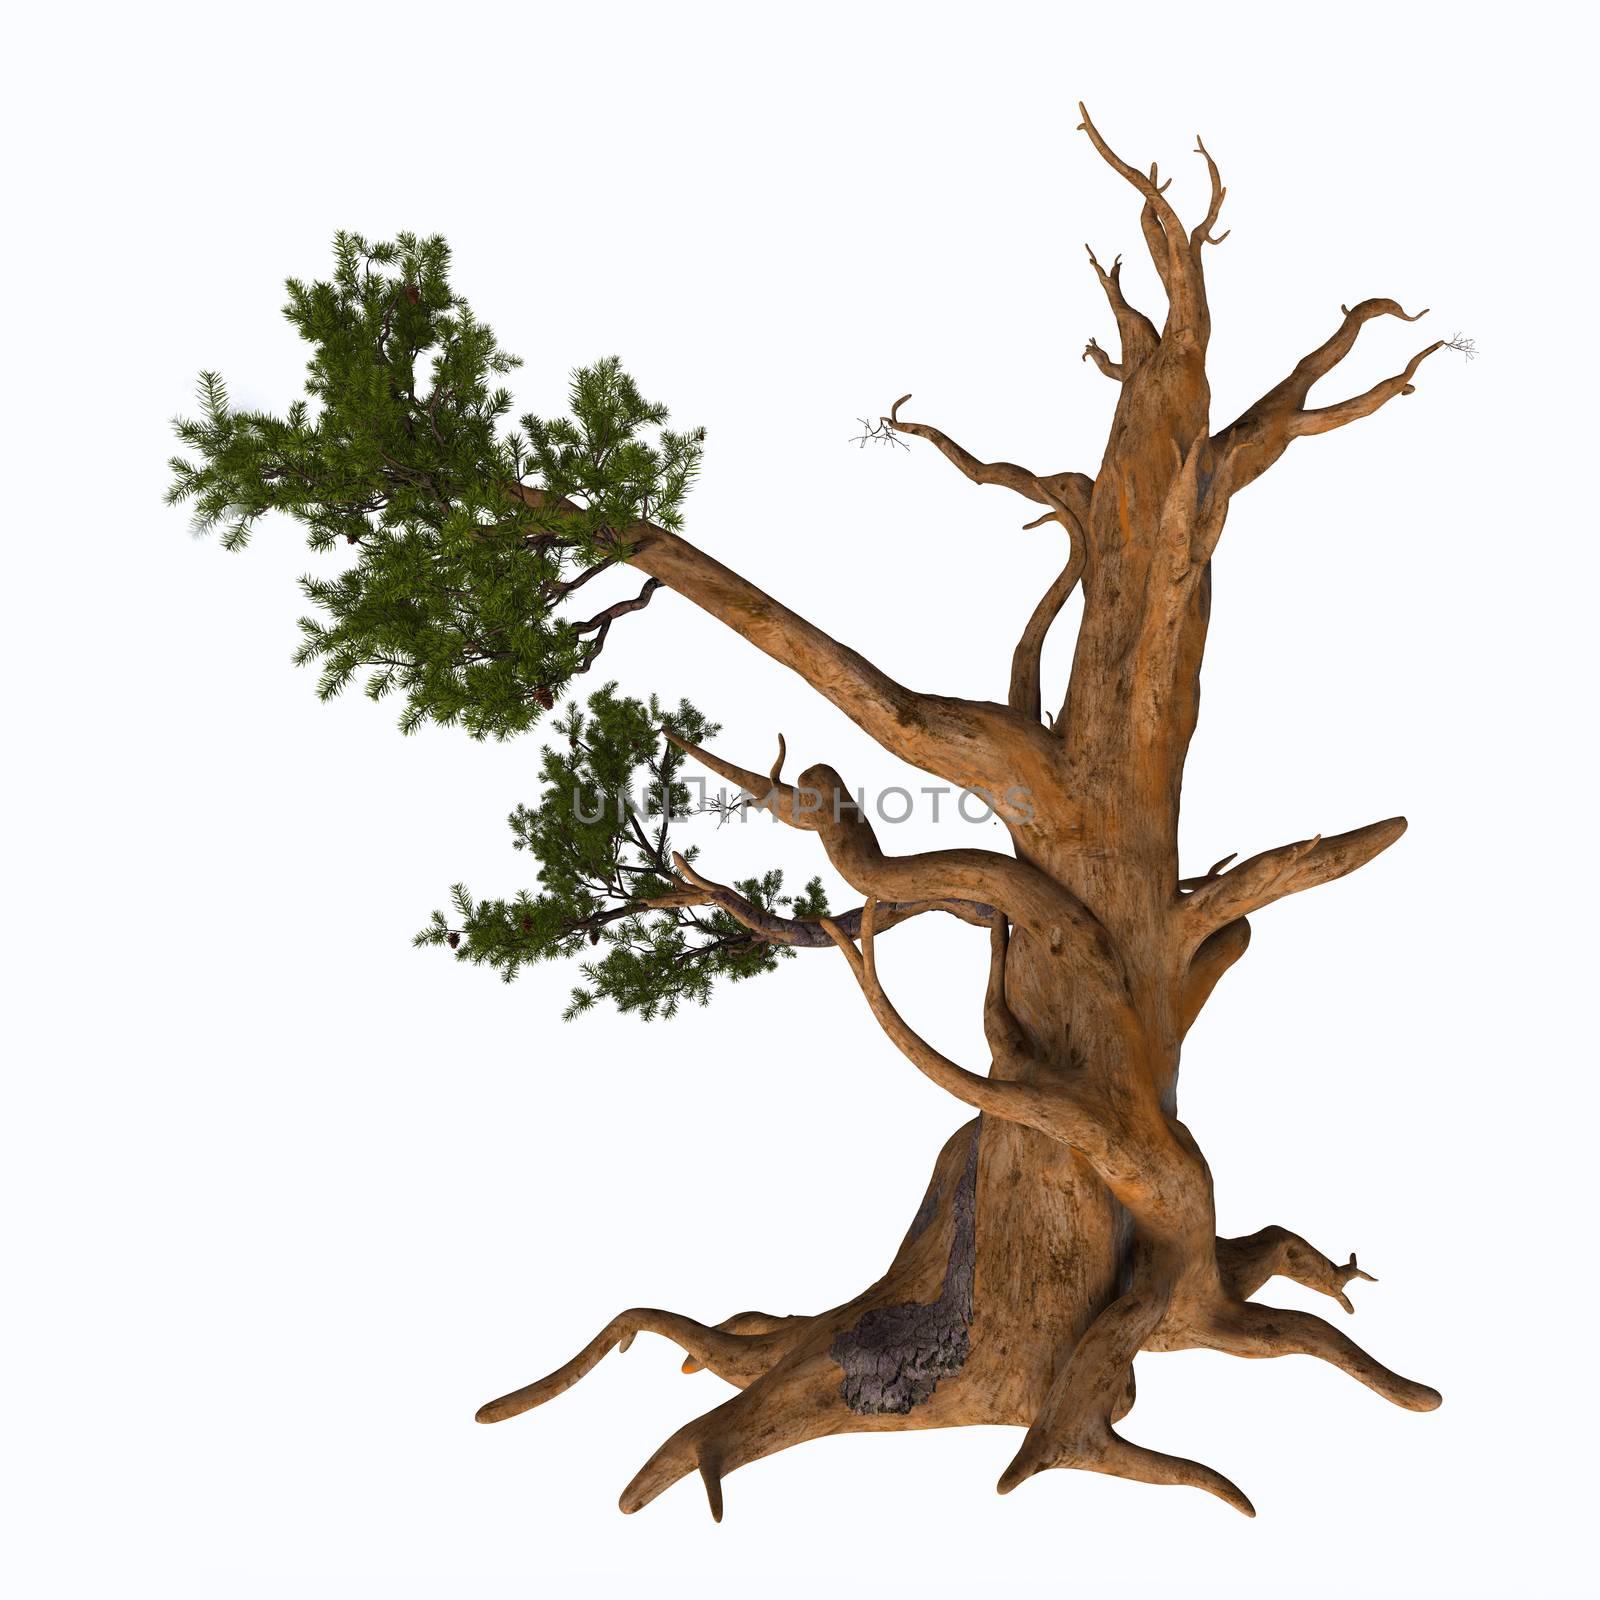 Bristlecone Pine Tree by Catmando